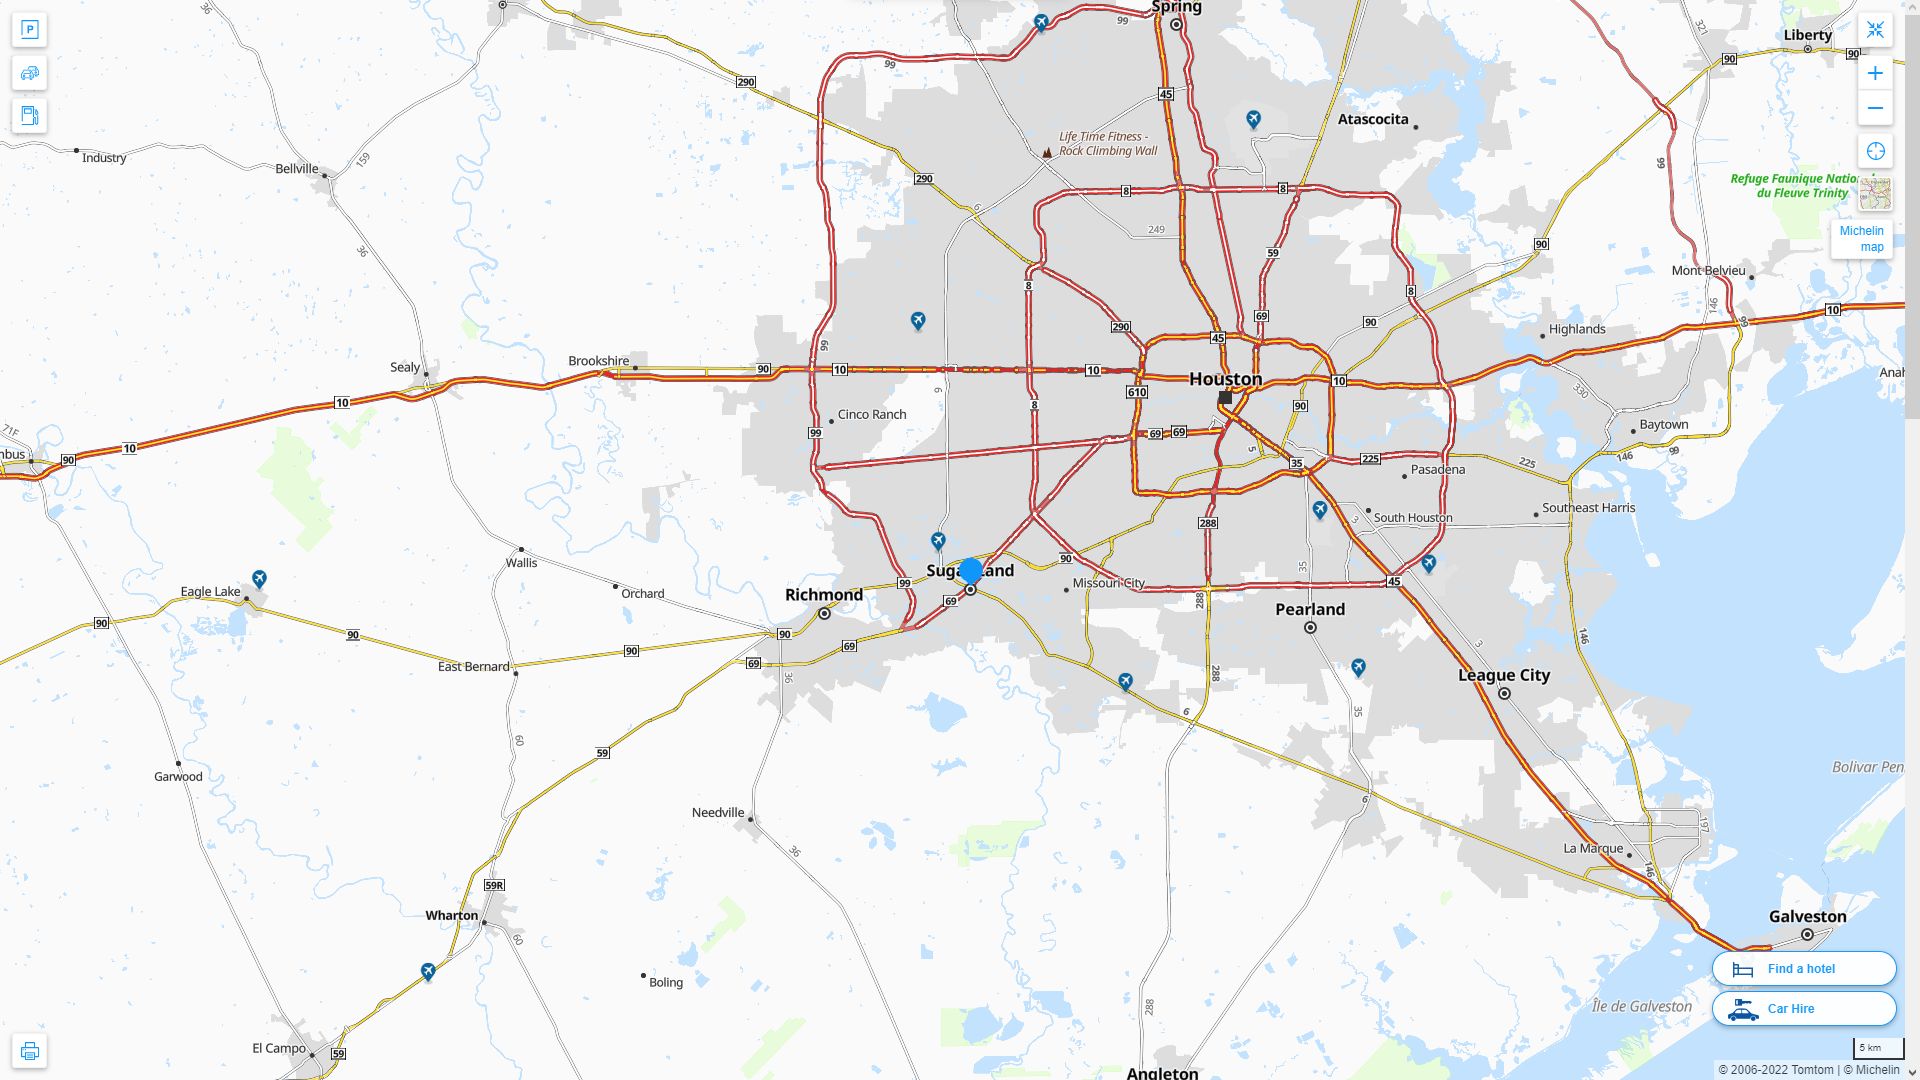 Sugar Land Texas Highway and Road Map